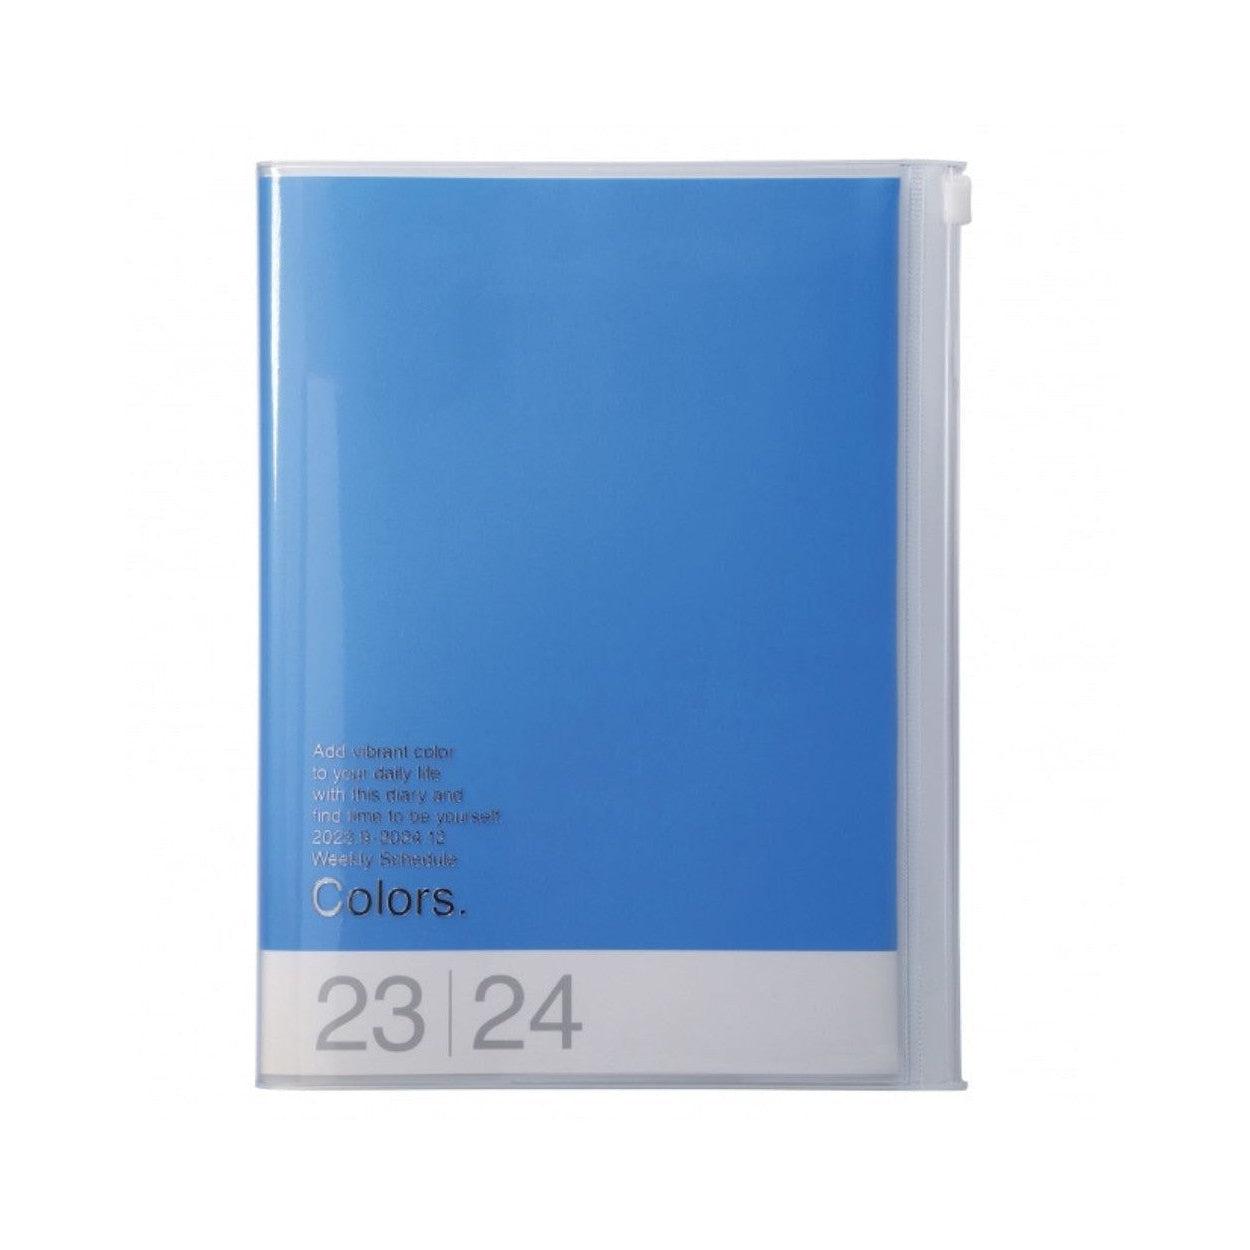 MARK'S Agenda A6 Colors-Agenda-Mark's Europe-2023-2024-Bleu-Papeterie du Dôme